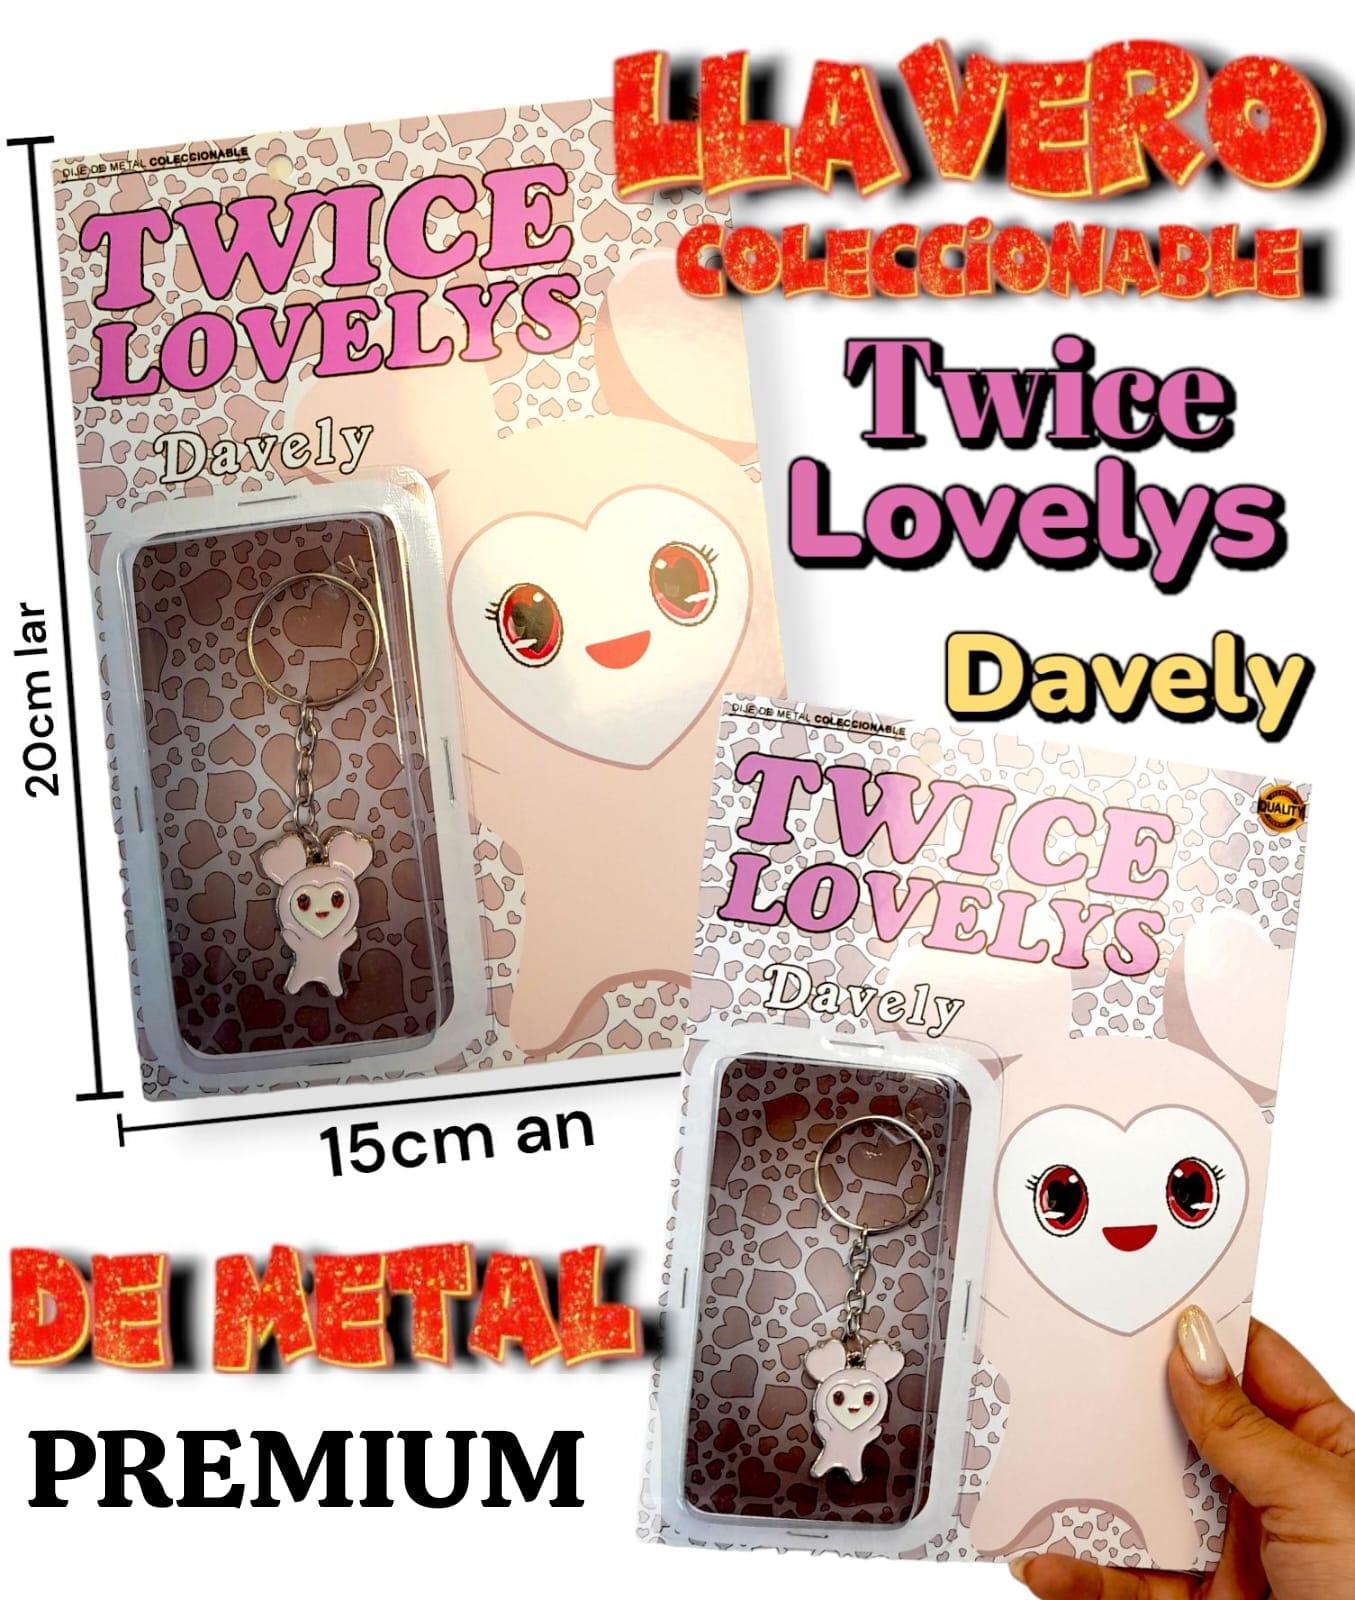 Llavero Premium Coleccionable de Mertal  Twice Lovelys (DAVELY)